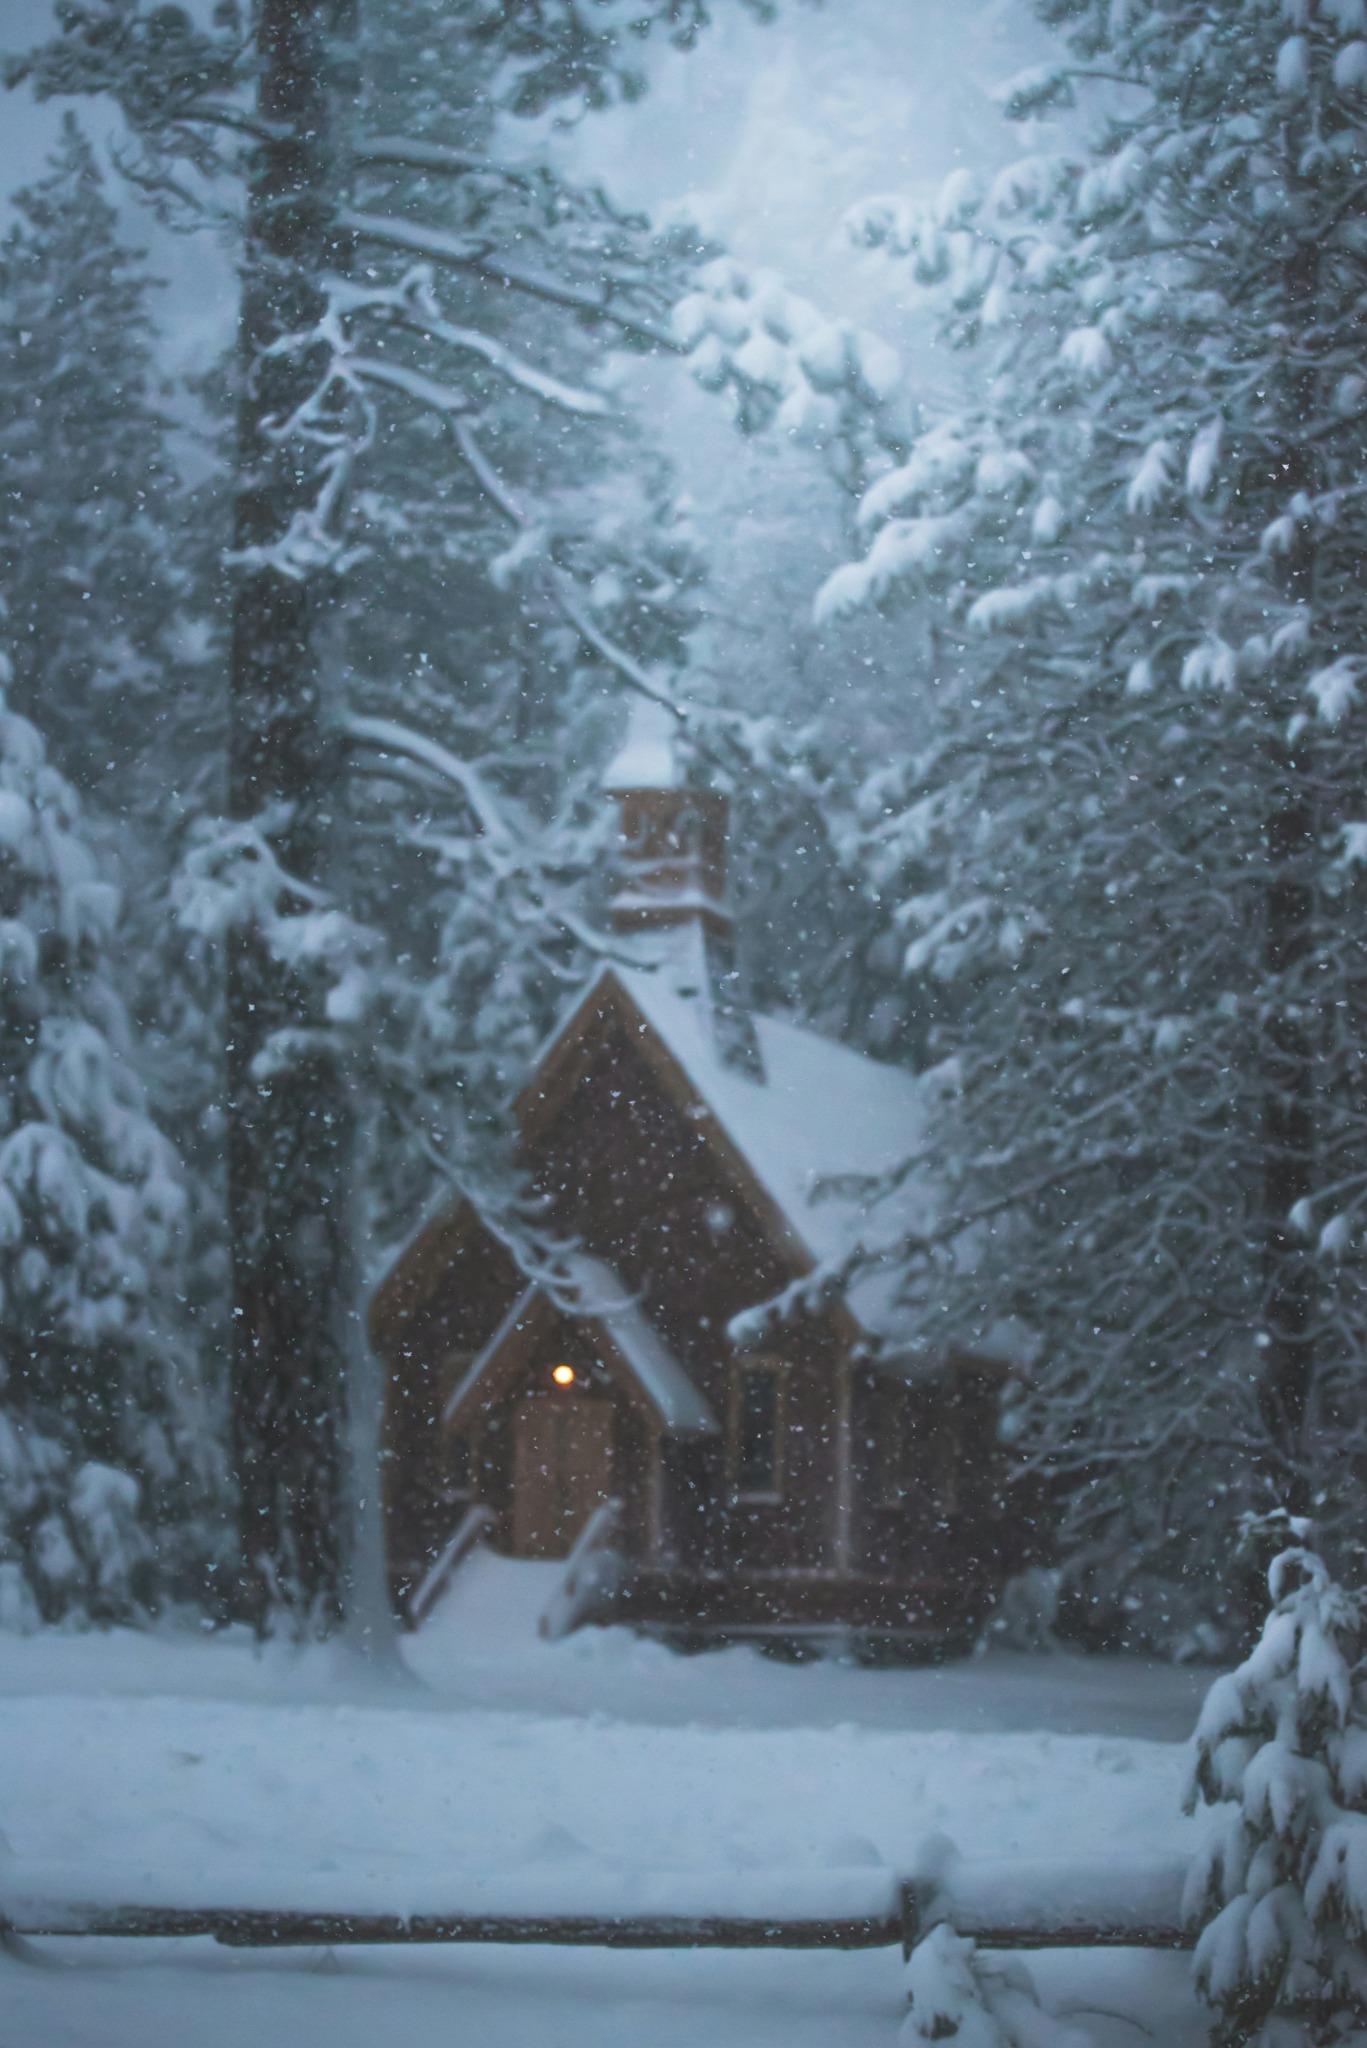 Cozy cabin heavy snowfall forest